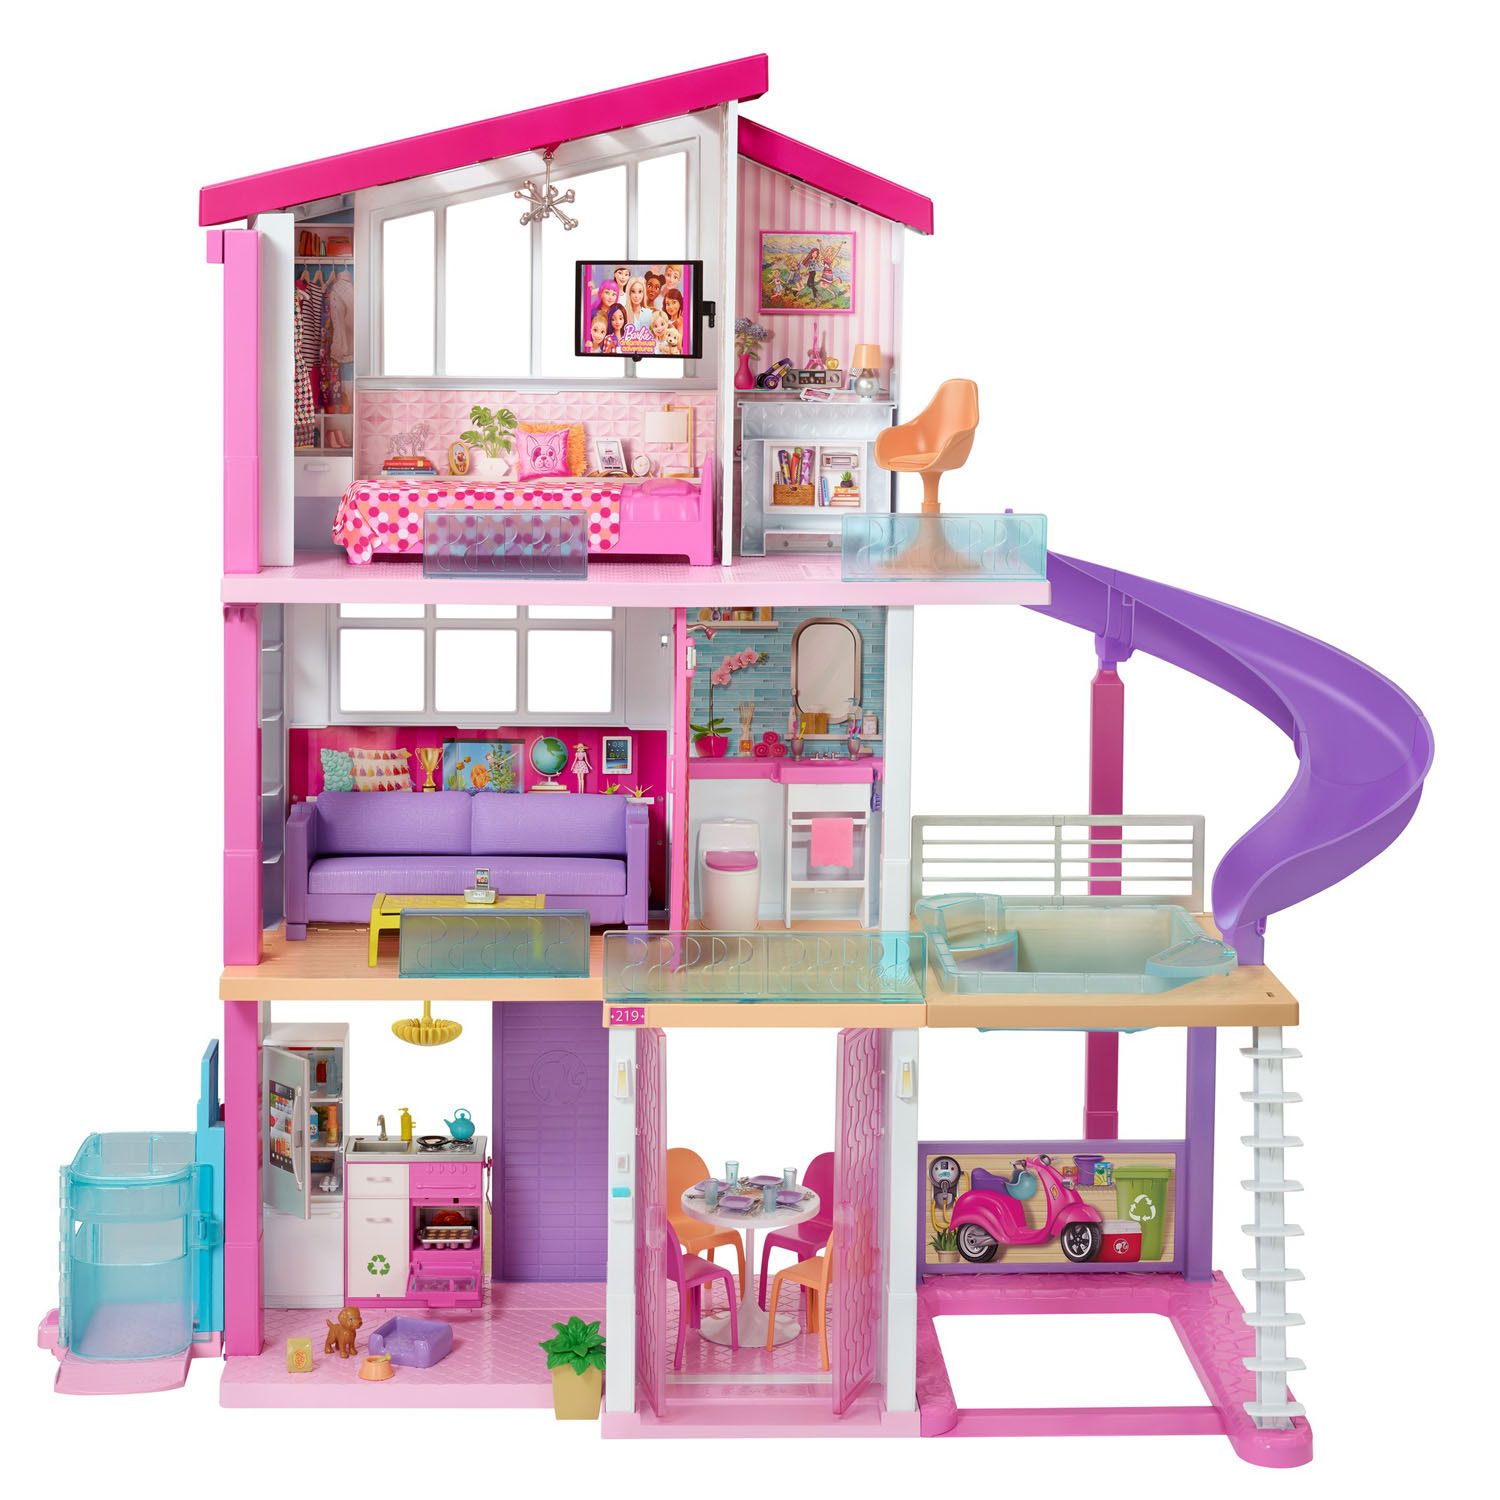 Sloppenwijk Permanent attribuut Barbie Droomhuis met Lift | Thimble Toys